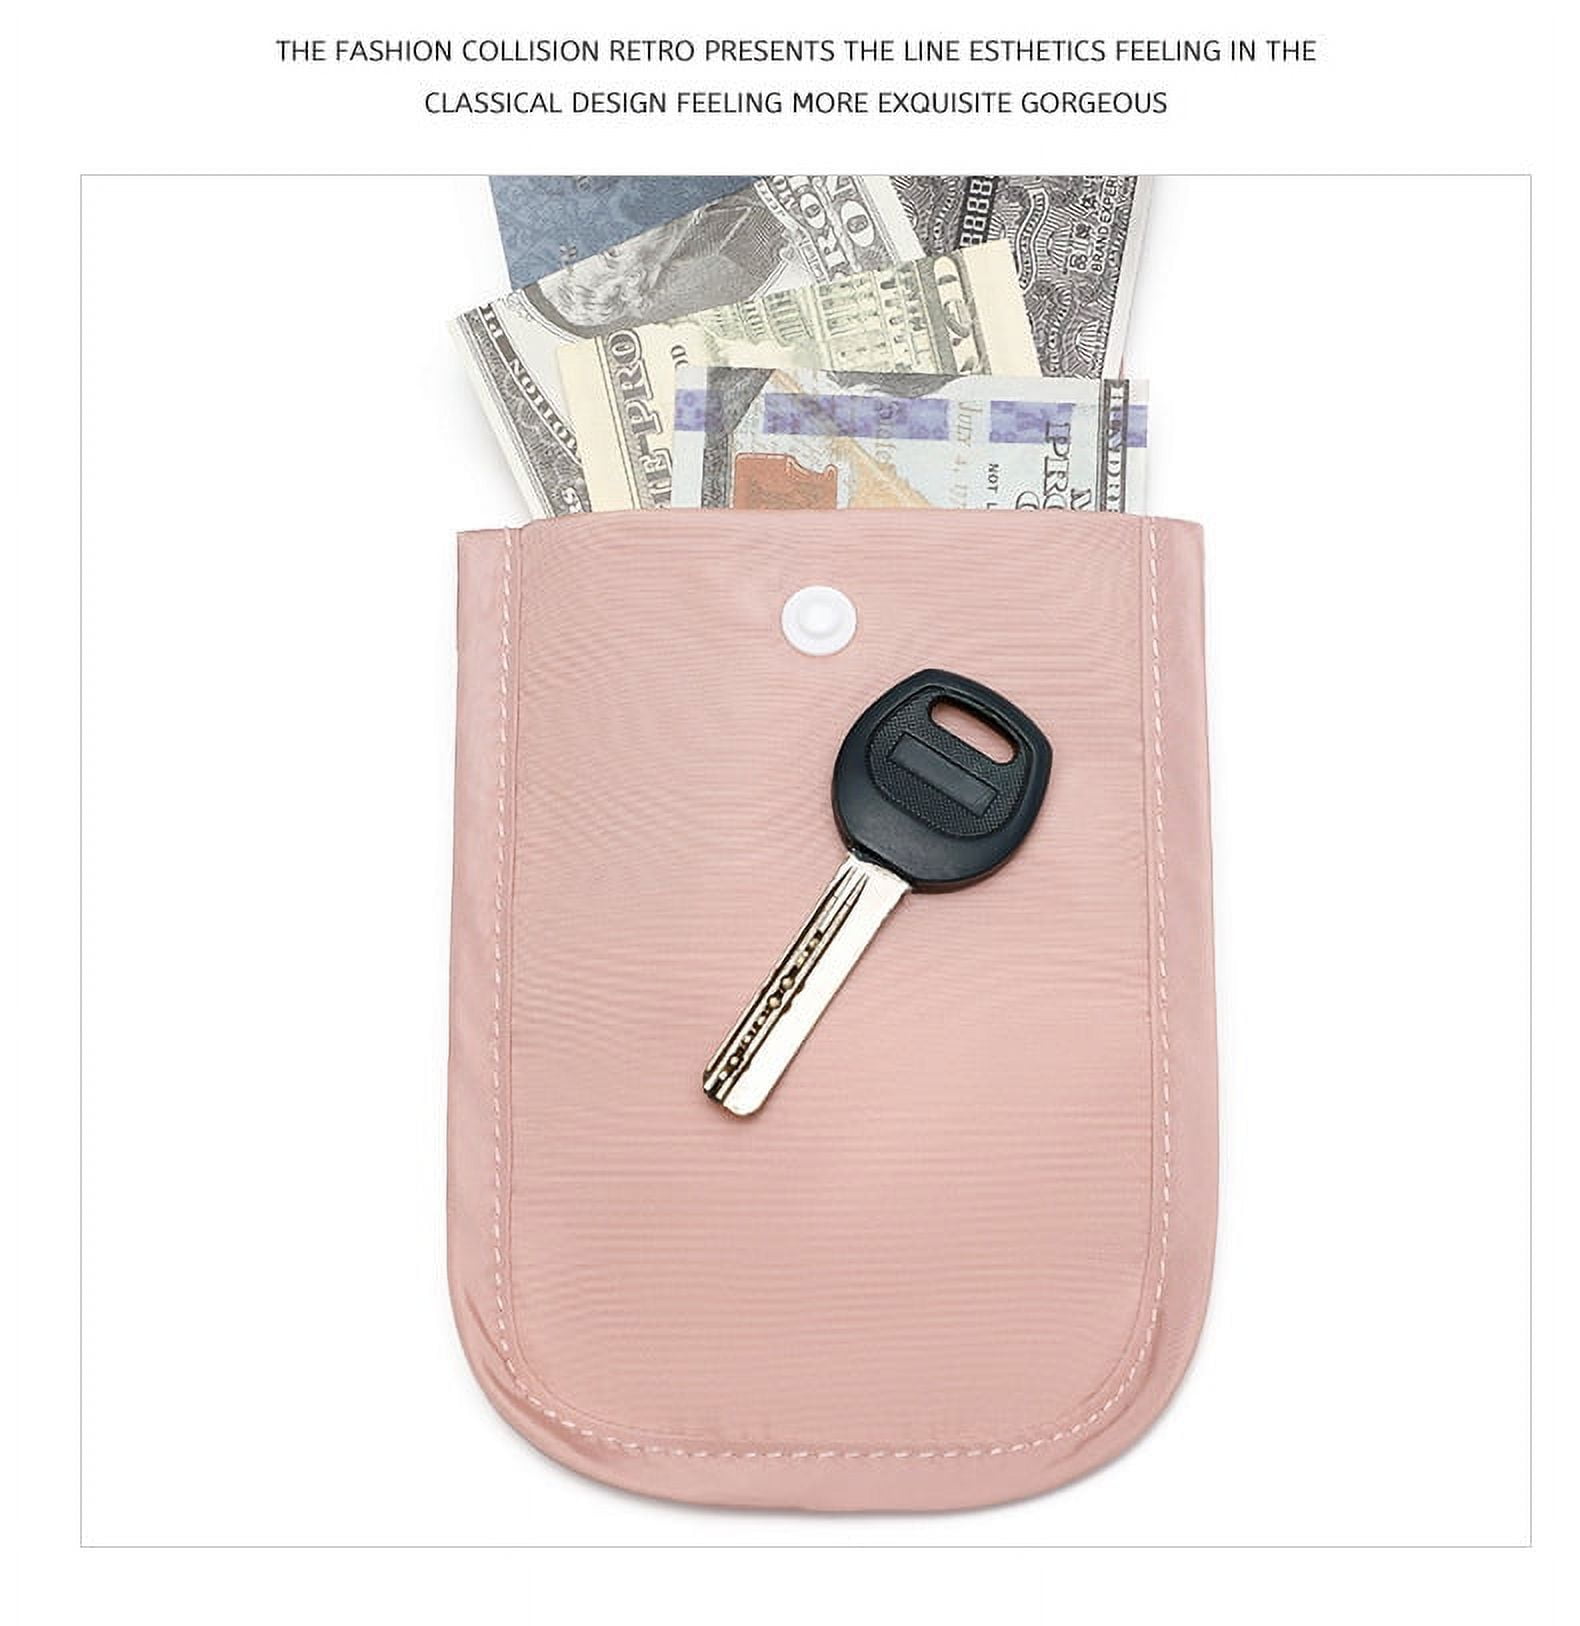  Travel Bra Wallet for Women, Hidden Bra Wallet Pickpocket  Proof Under Clothes Money Belt Pouch Secret Travel Wallet for Money  Valuables (Black, Nude)